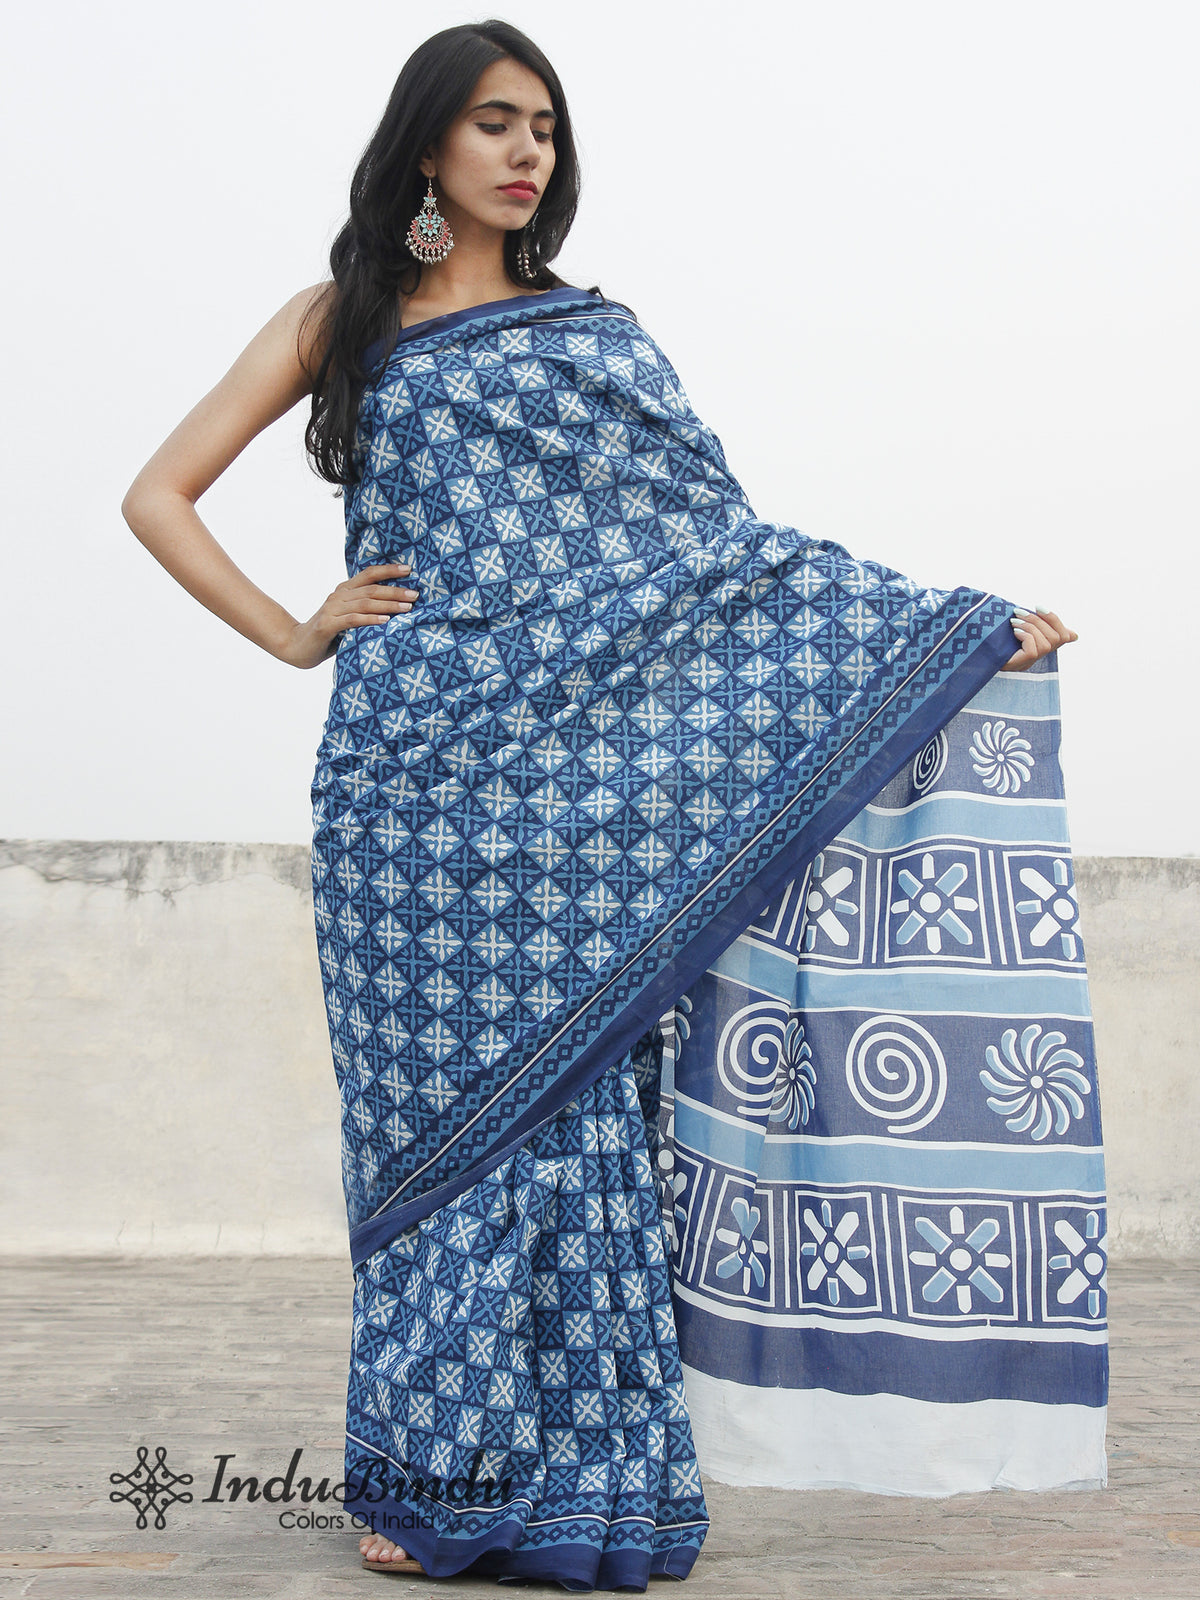 Indigo Blue White Hand Block Printed Cotton Saree In Natural Colors - S031702387